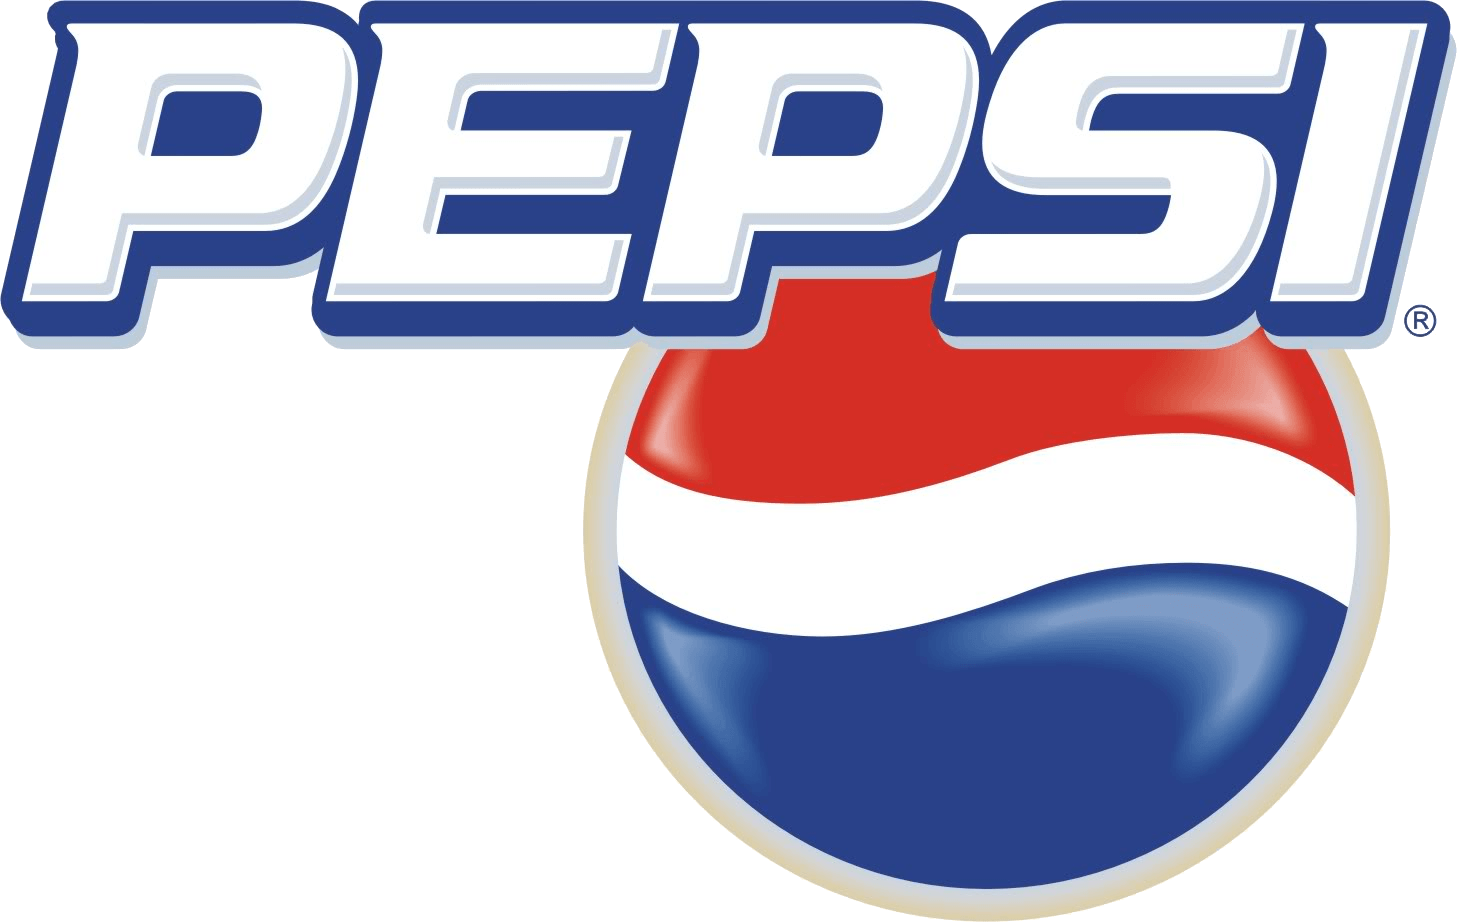 70'S Pepsi Logo - Pepsi | Logopedia | FANDOM powered by Wikia